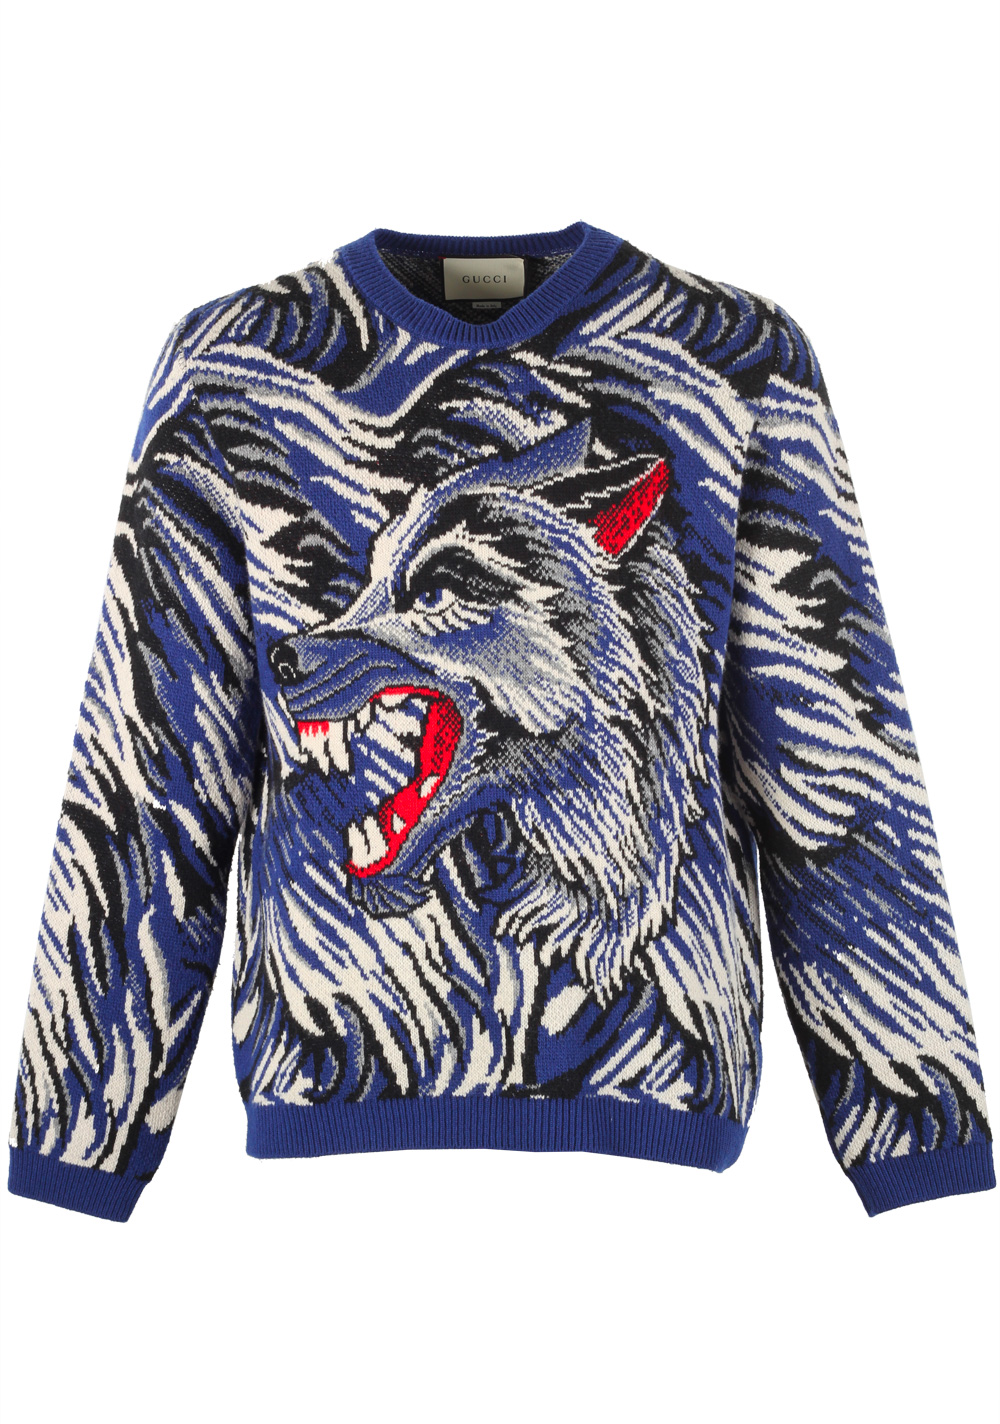 gucci sweater wolf